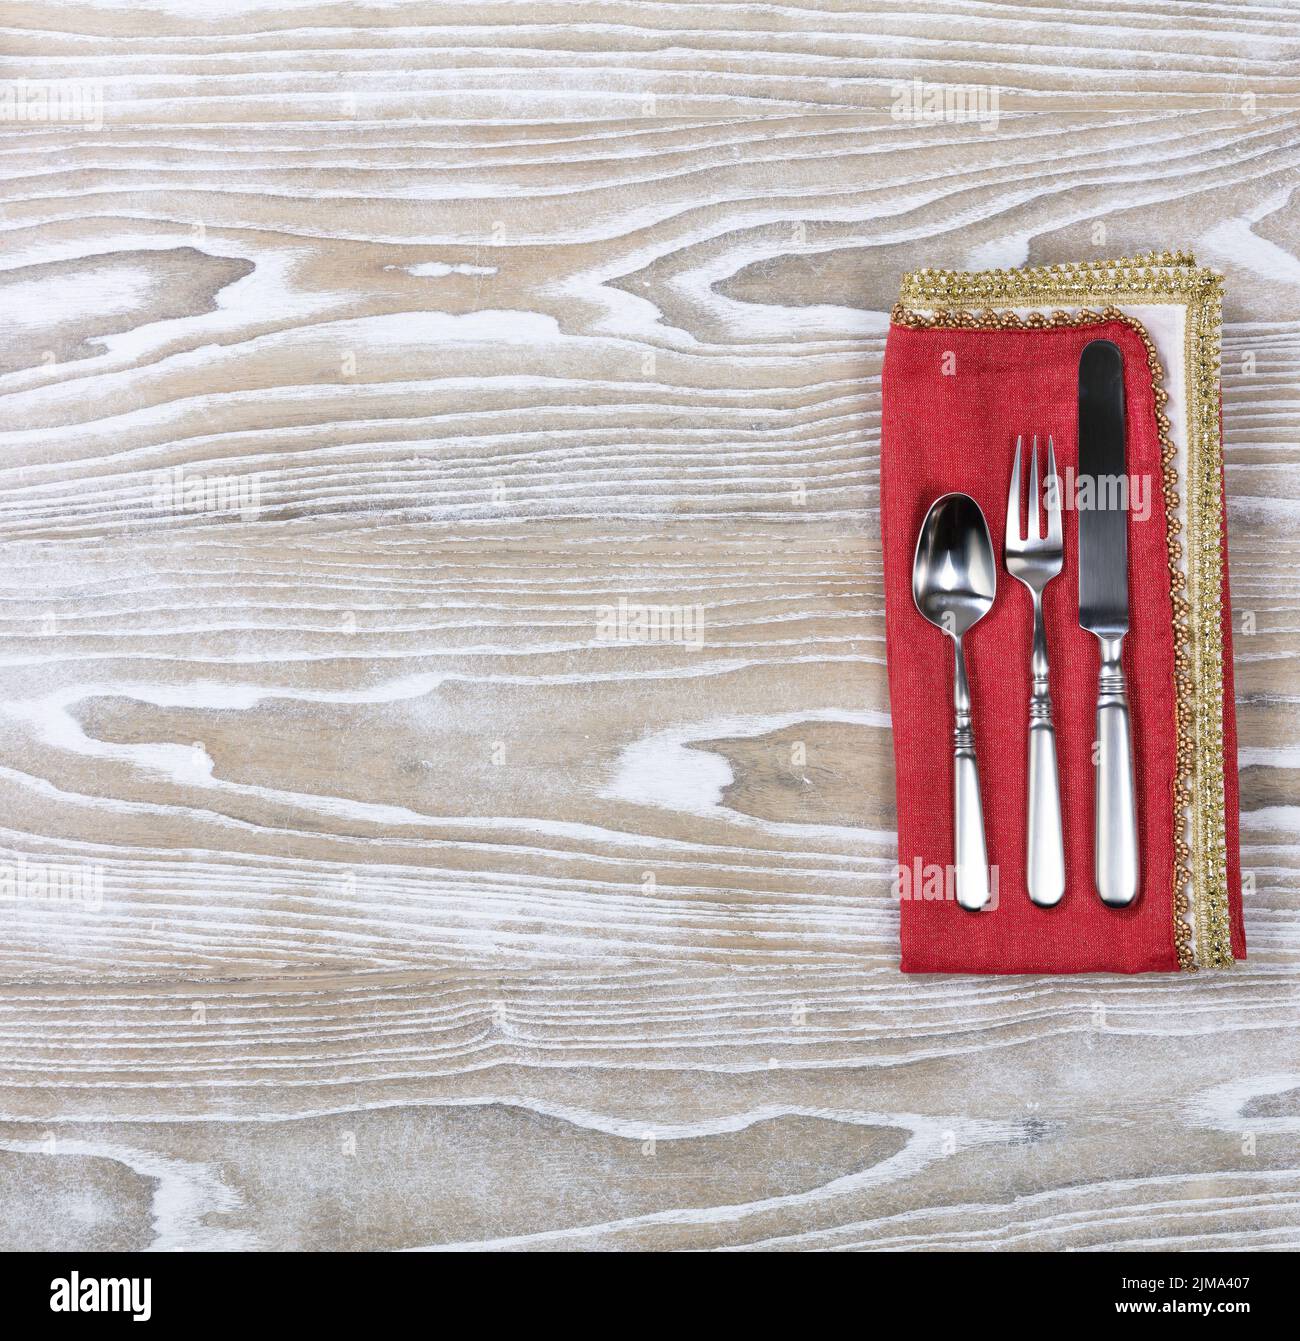 Silverware set and napkin for seasonal holiday on aged white wood Stock Photo